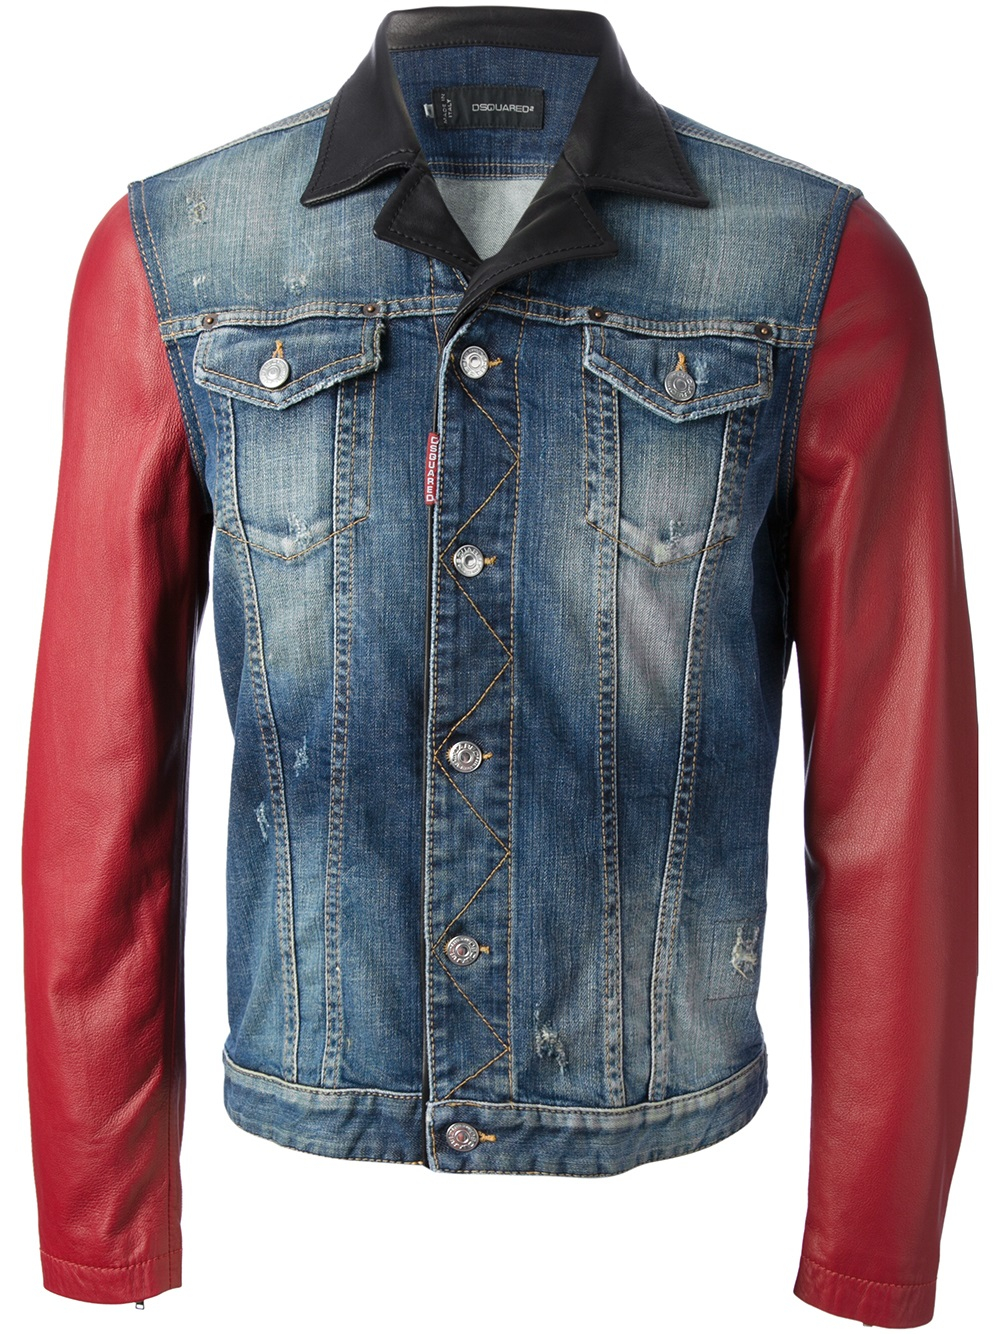 DSquared² Contrast Sleeve Denim Jacket in Blue for Men - Lyst